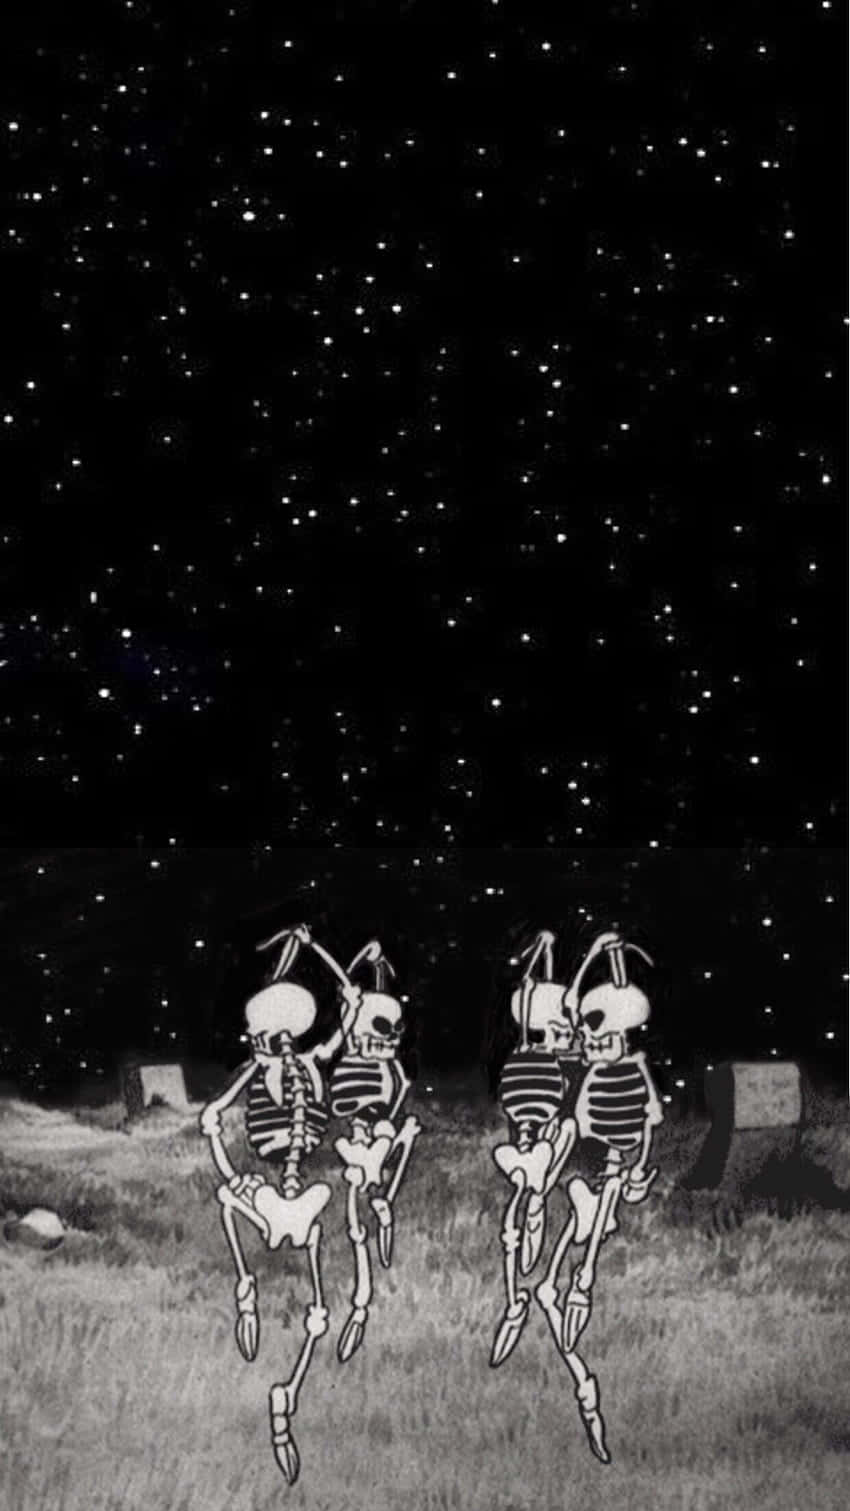 Skeletons Dancing In The Night Wallpaper